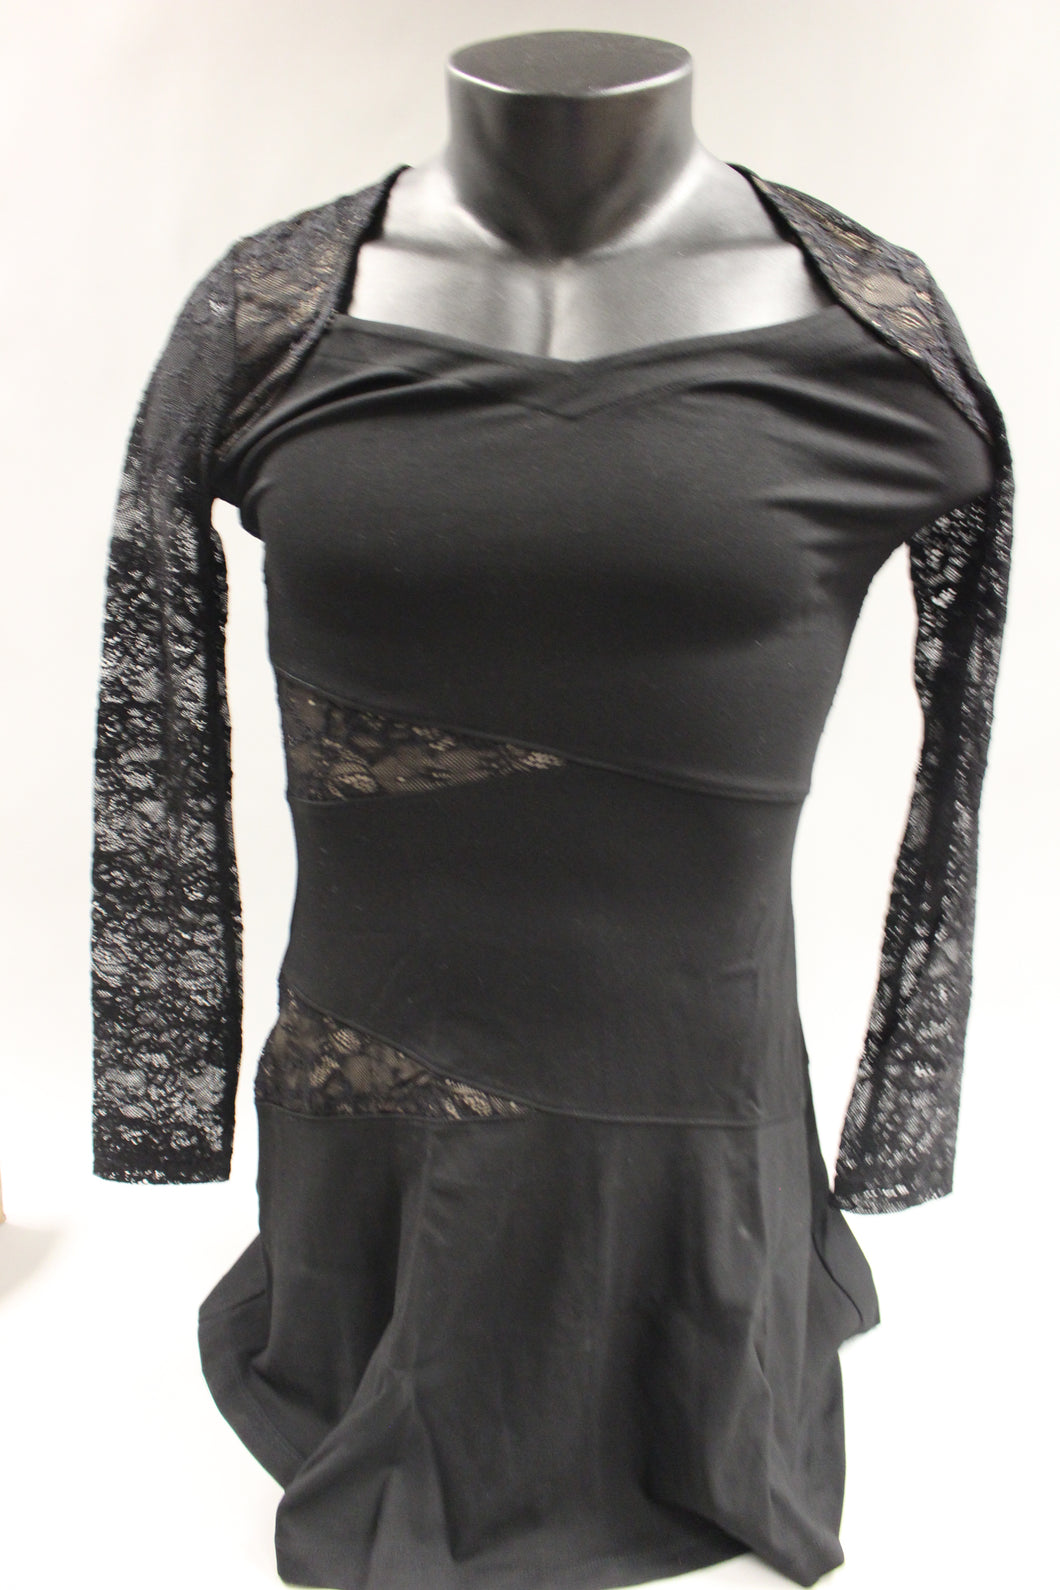 Ali and Jay Size Medium Women's Back Zip Up Dress -Black -Medium -New